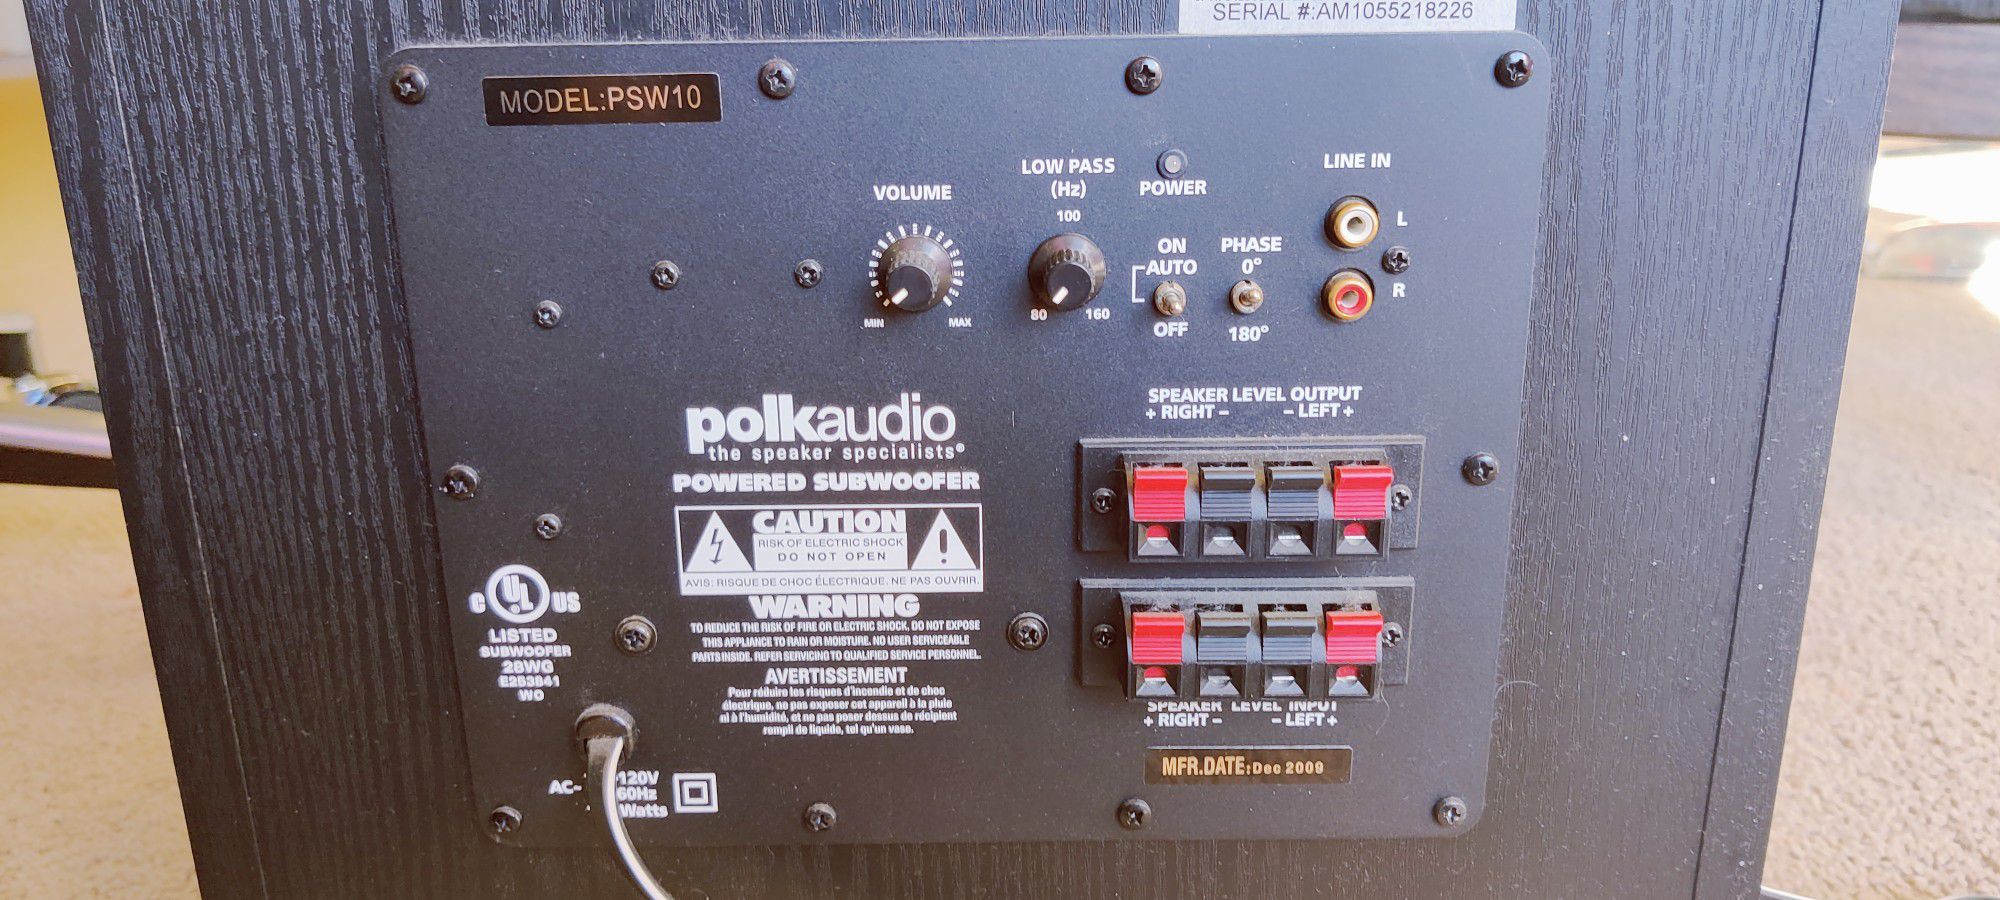 REDUCED: Polk Audio Subwoofer And Klipsch Center Speaker